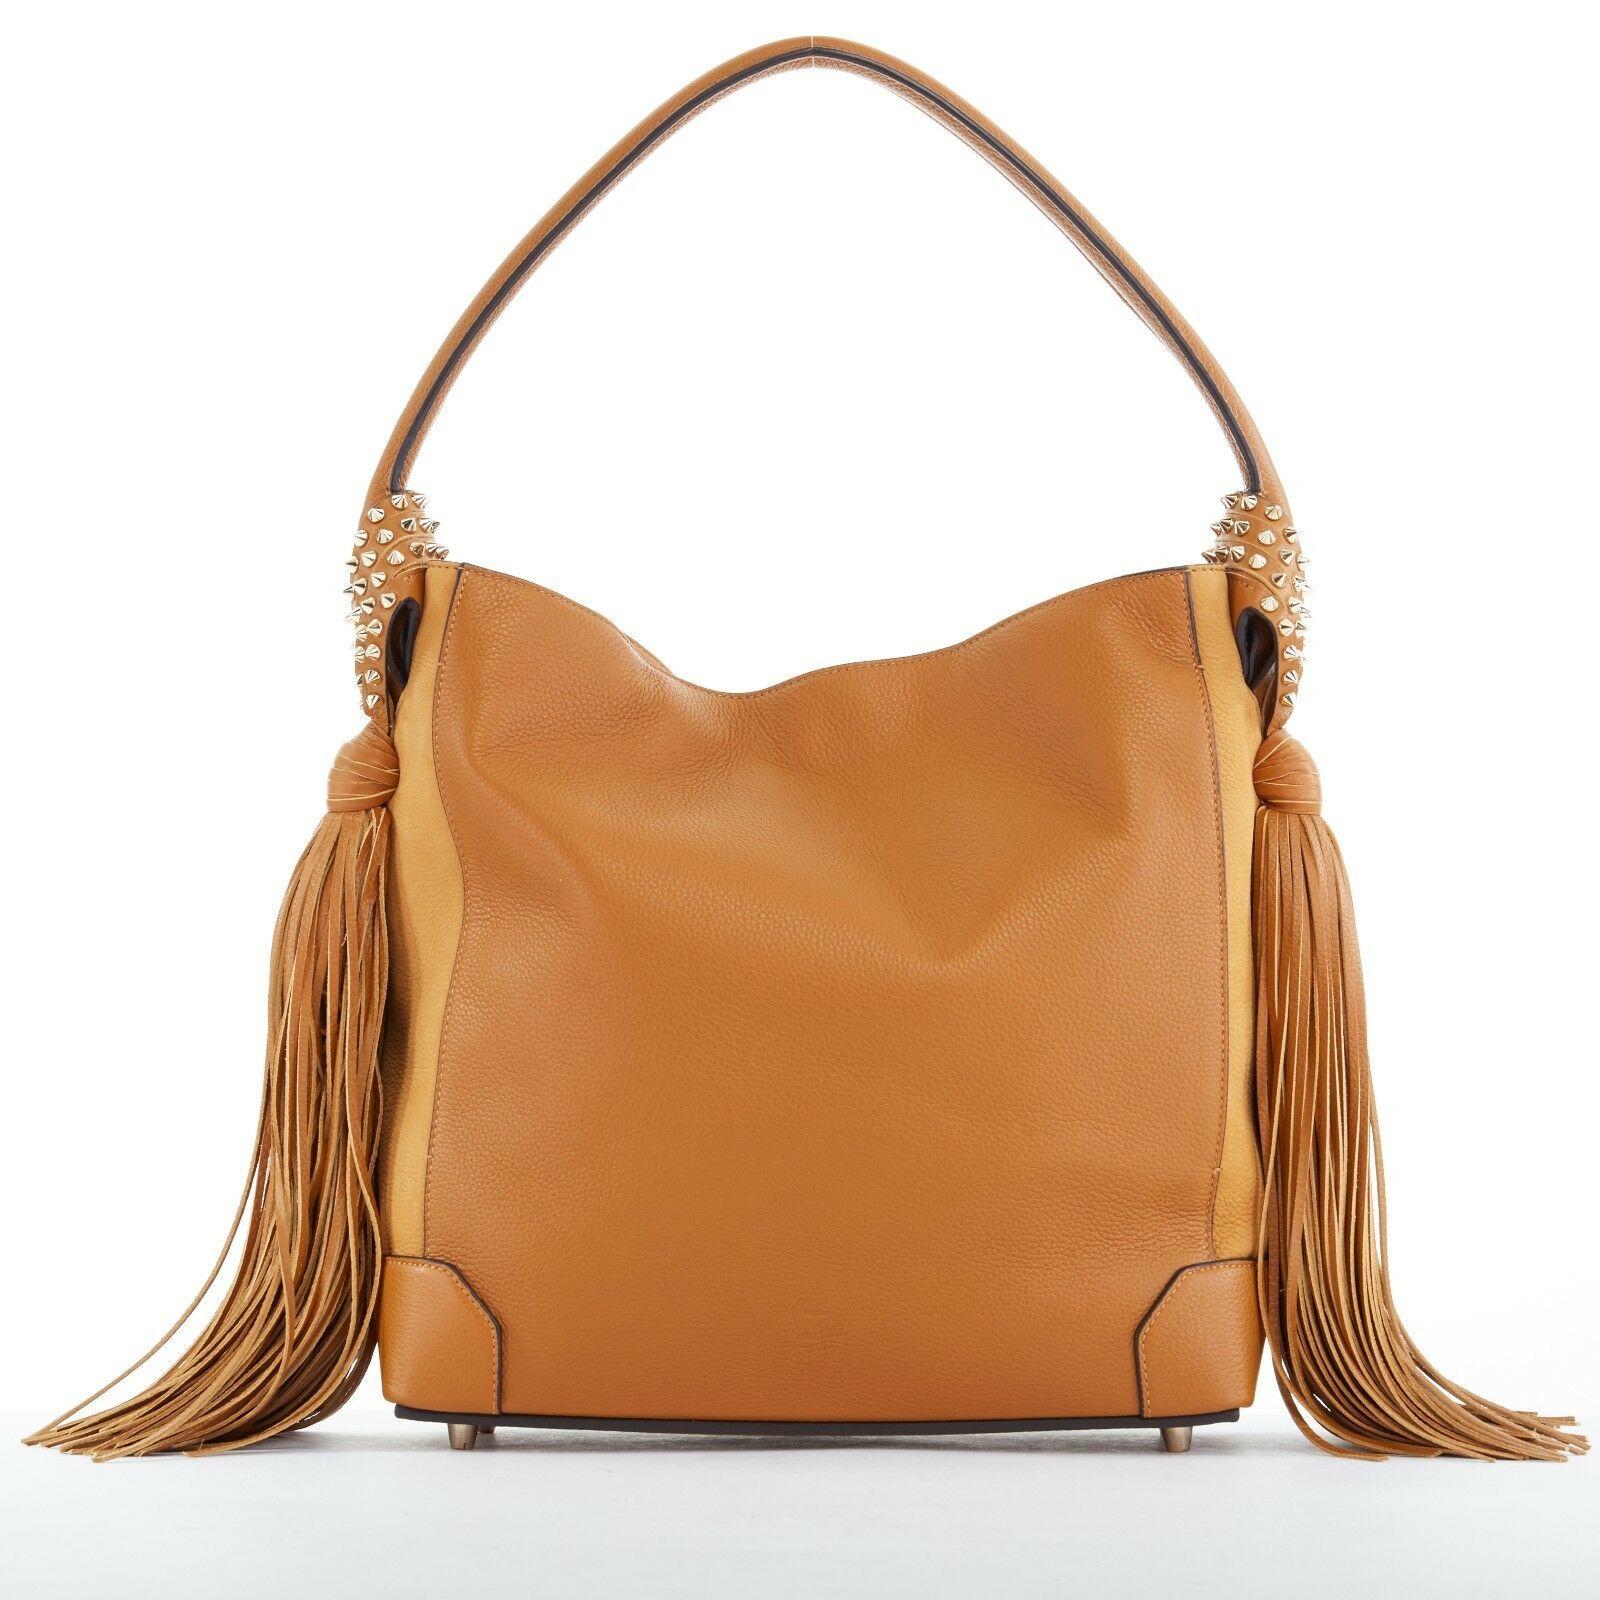 Women's new CHRISTIAN LOUBOUTIN Eloise gold spike stud fringe tan brown leather hobo bag